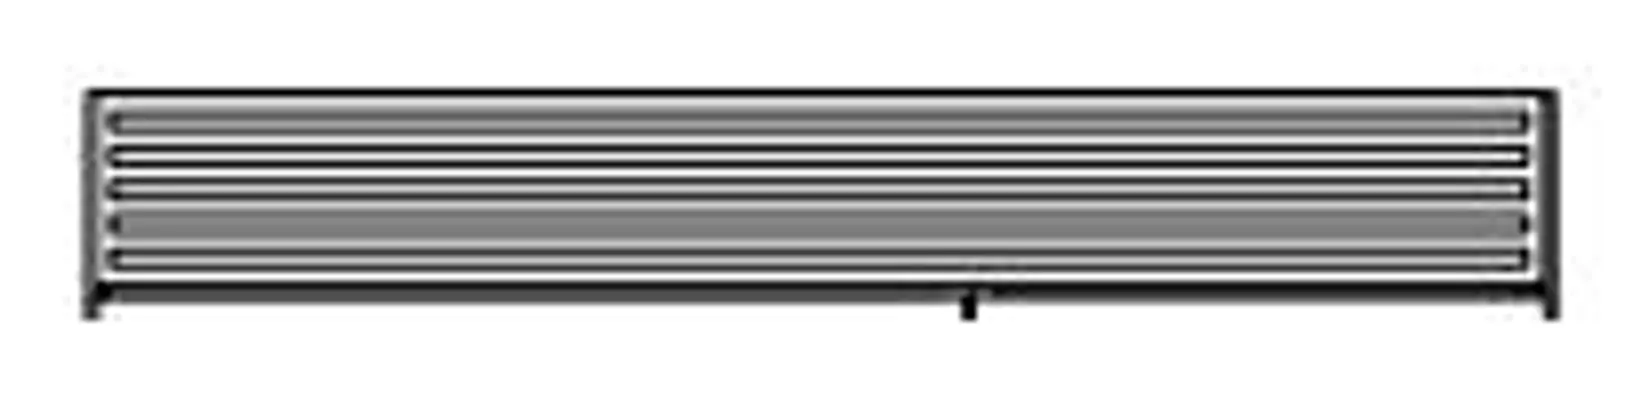 XPRO210TOP-Fhiaba-Koel-vries-accessoires